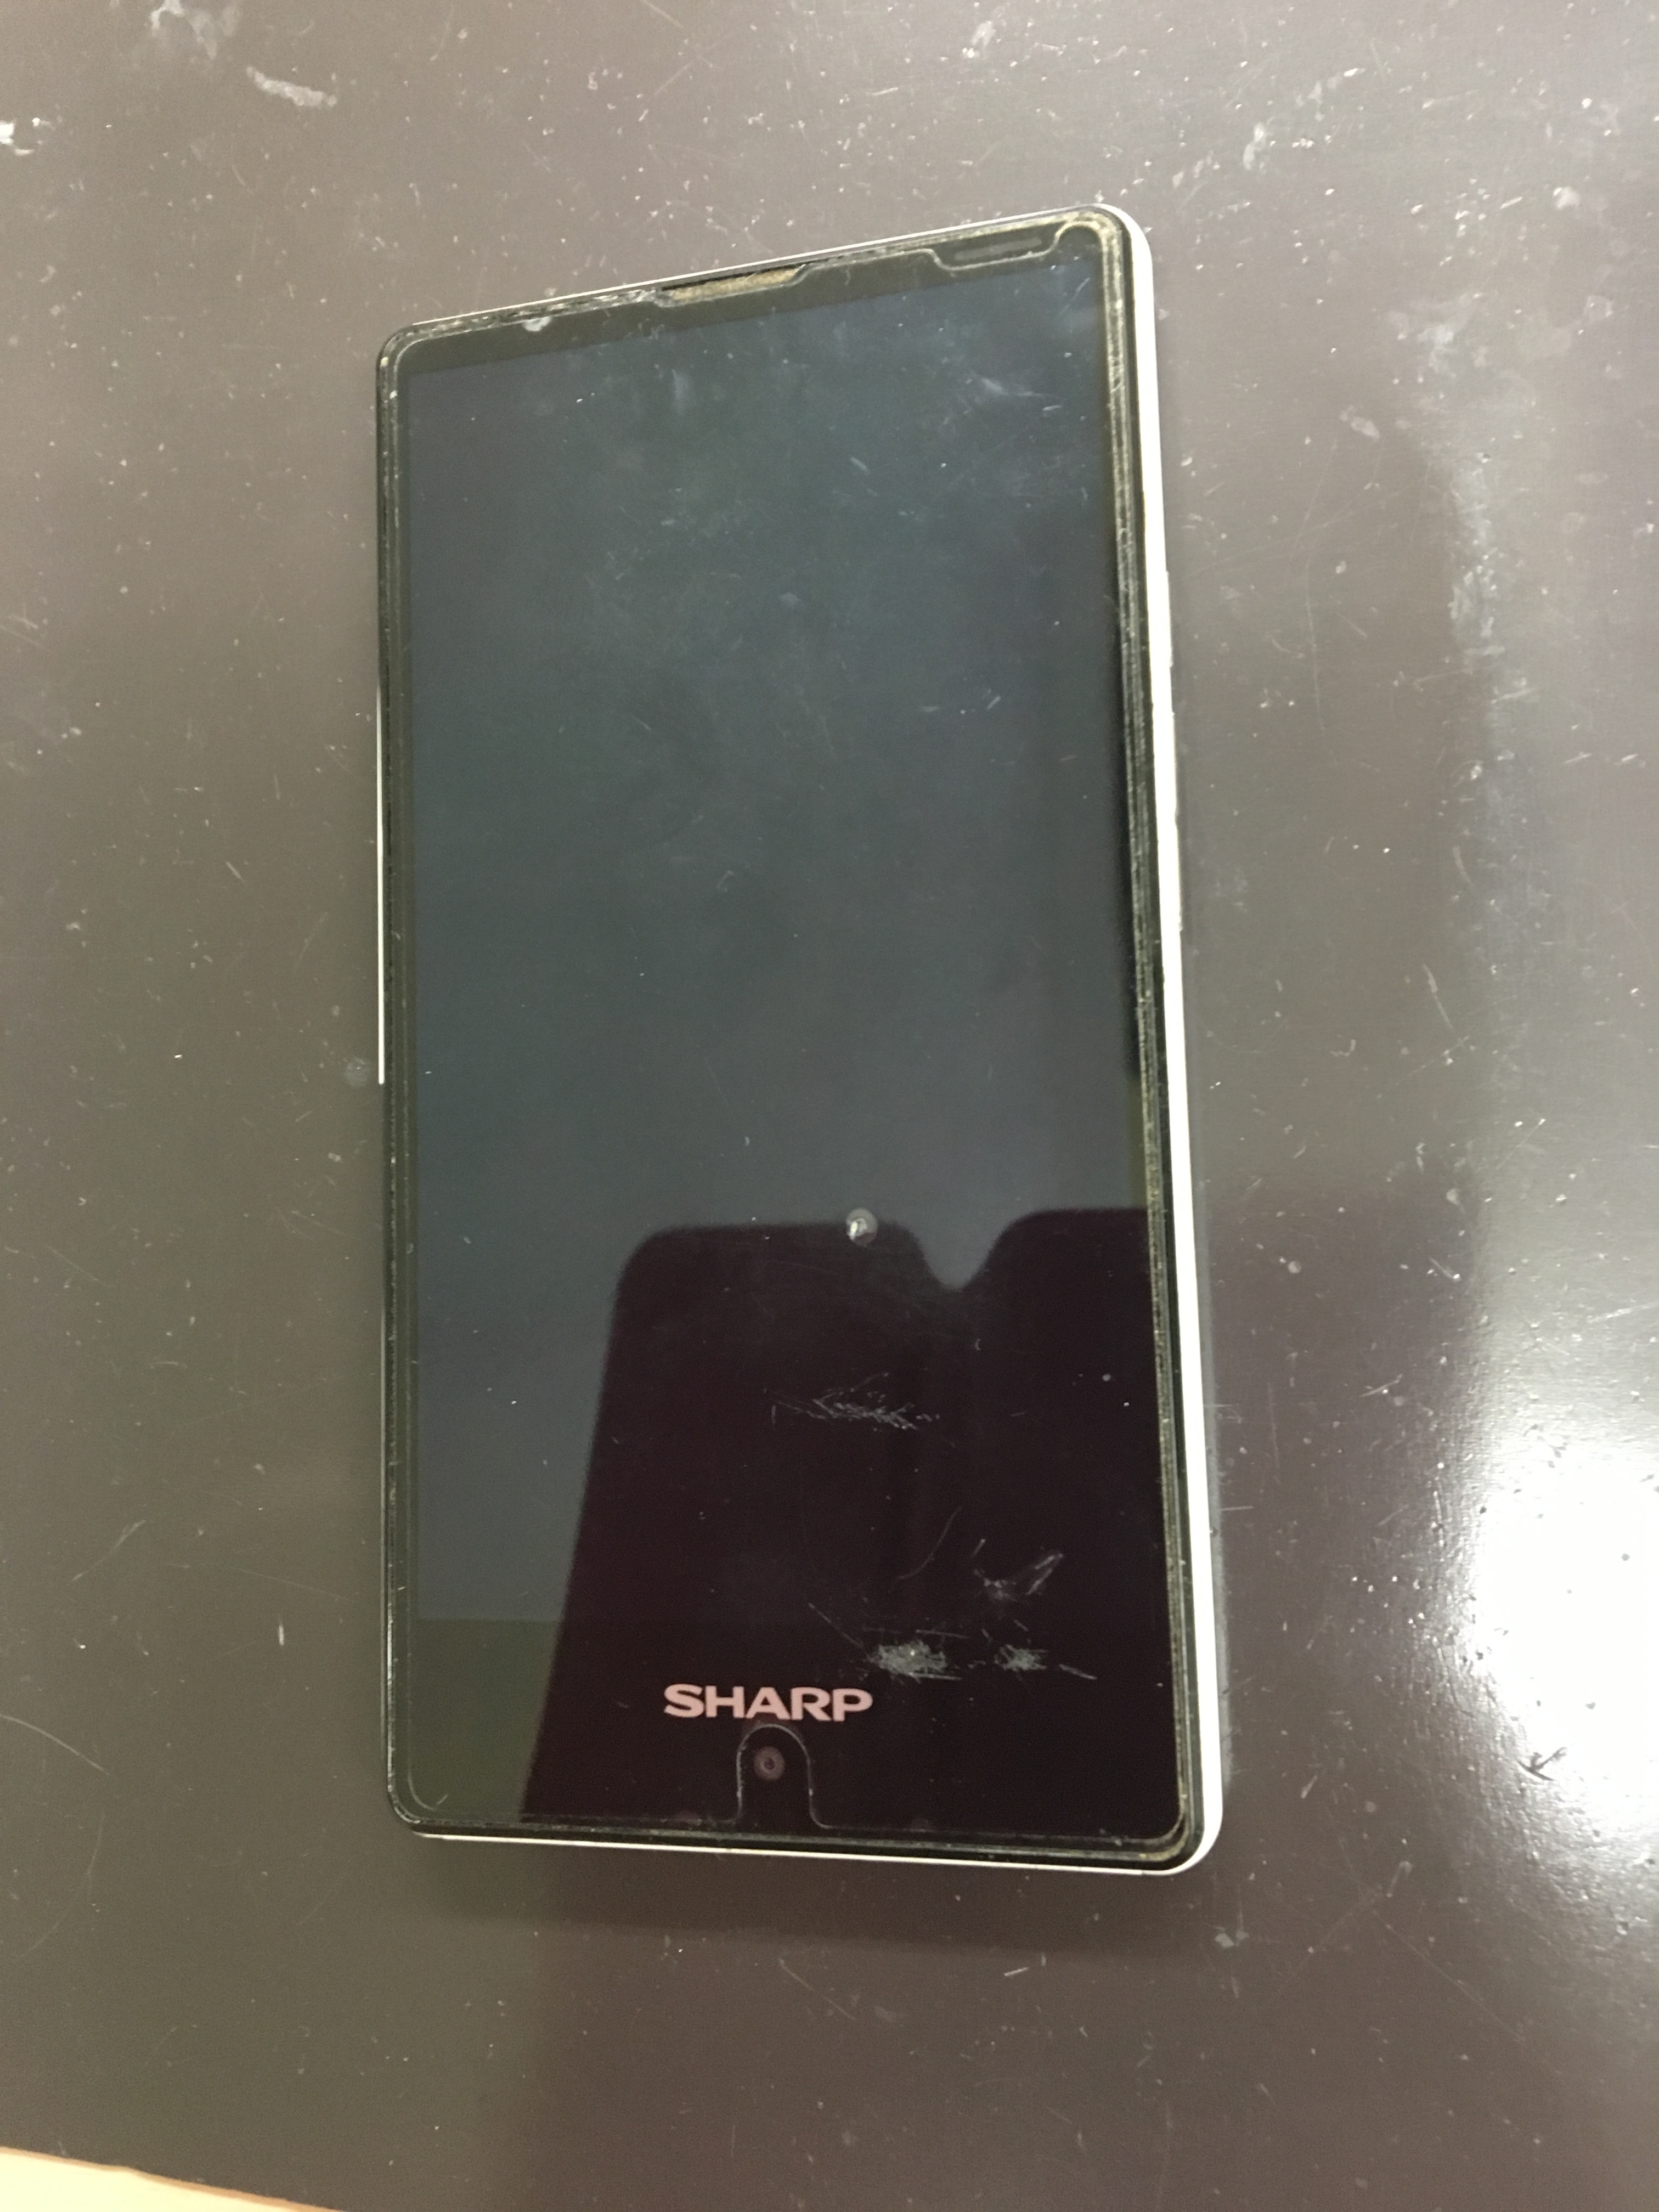 AQUOS mini(SH-M03)の修理のご紹介 | Xperia Galaxy Zenfone Huawei Nexus修理のアンドロイドホスピタル